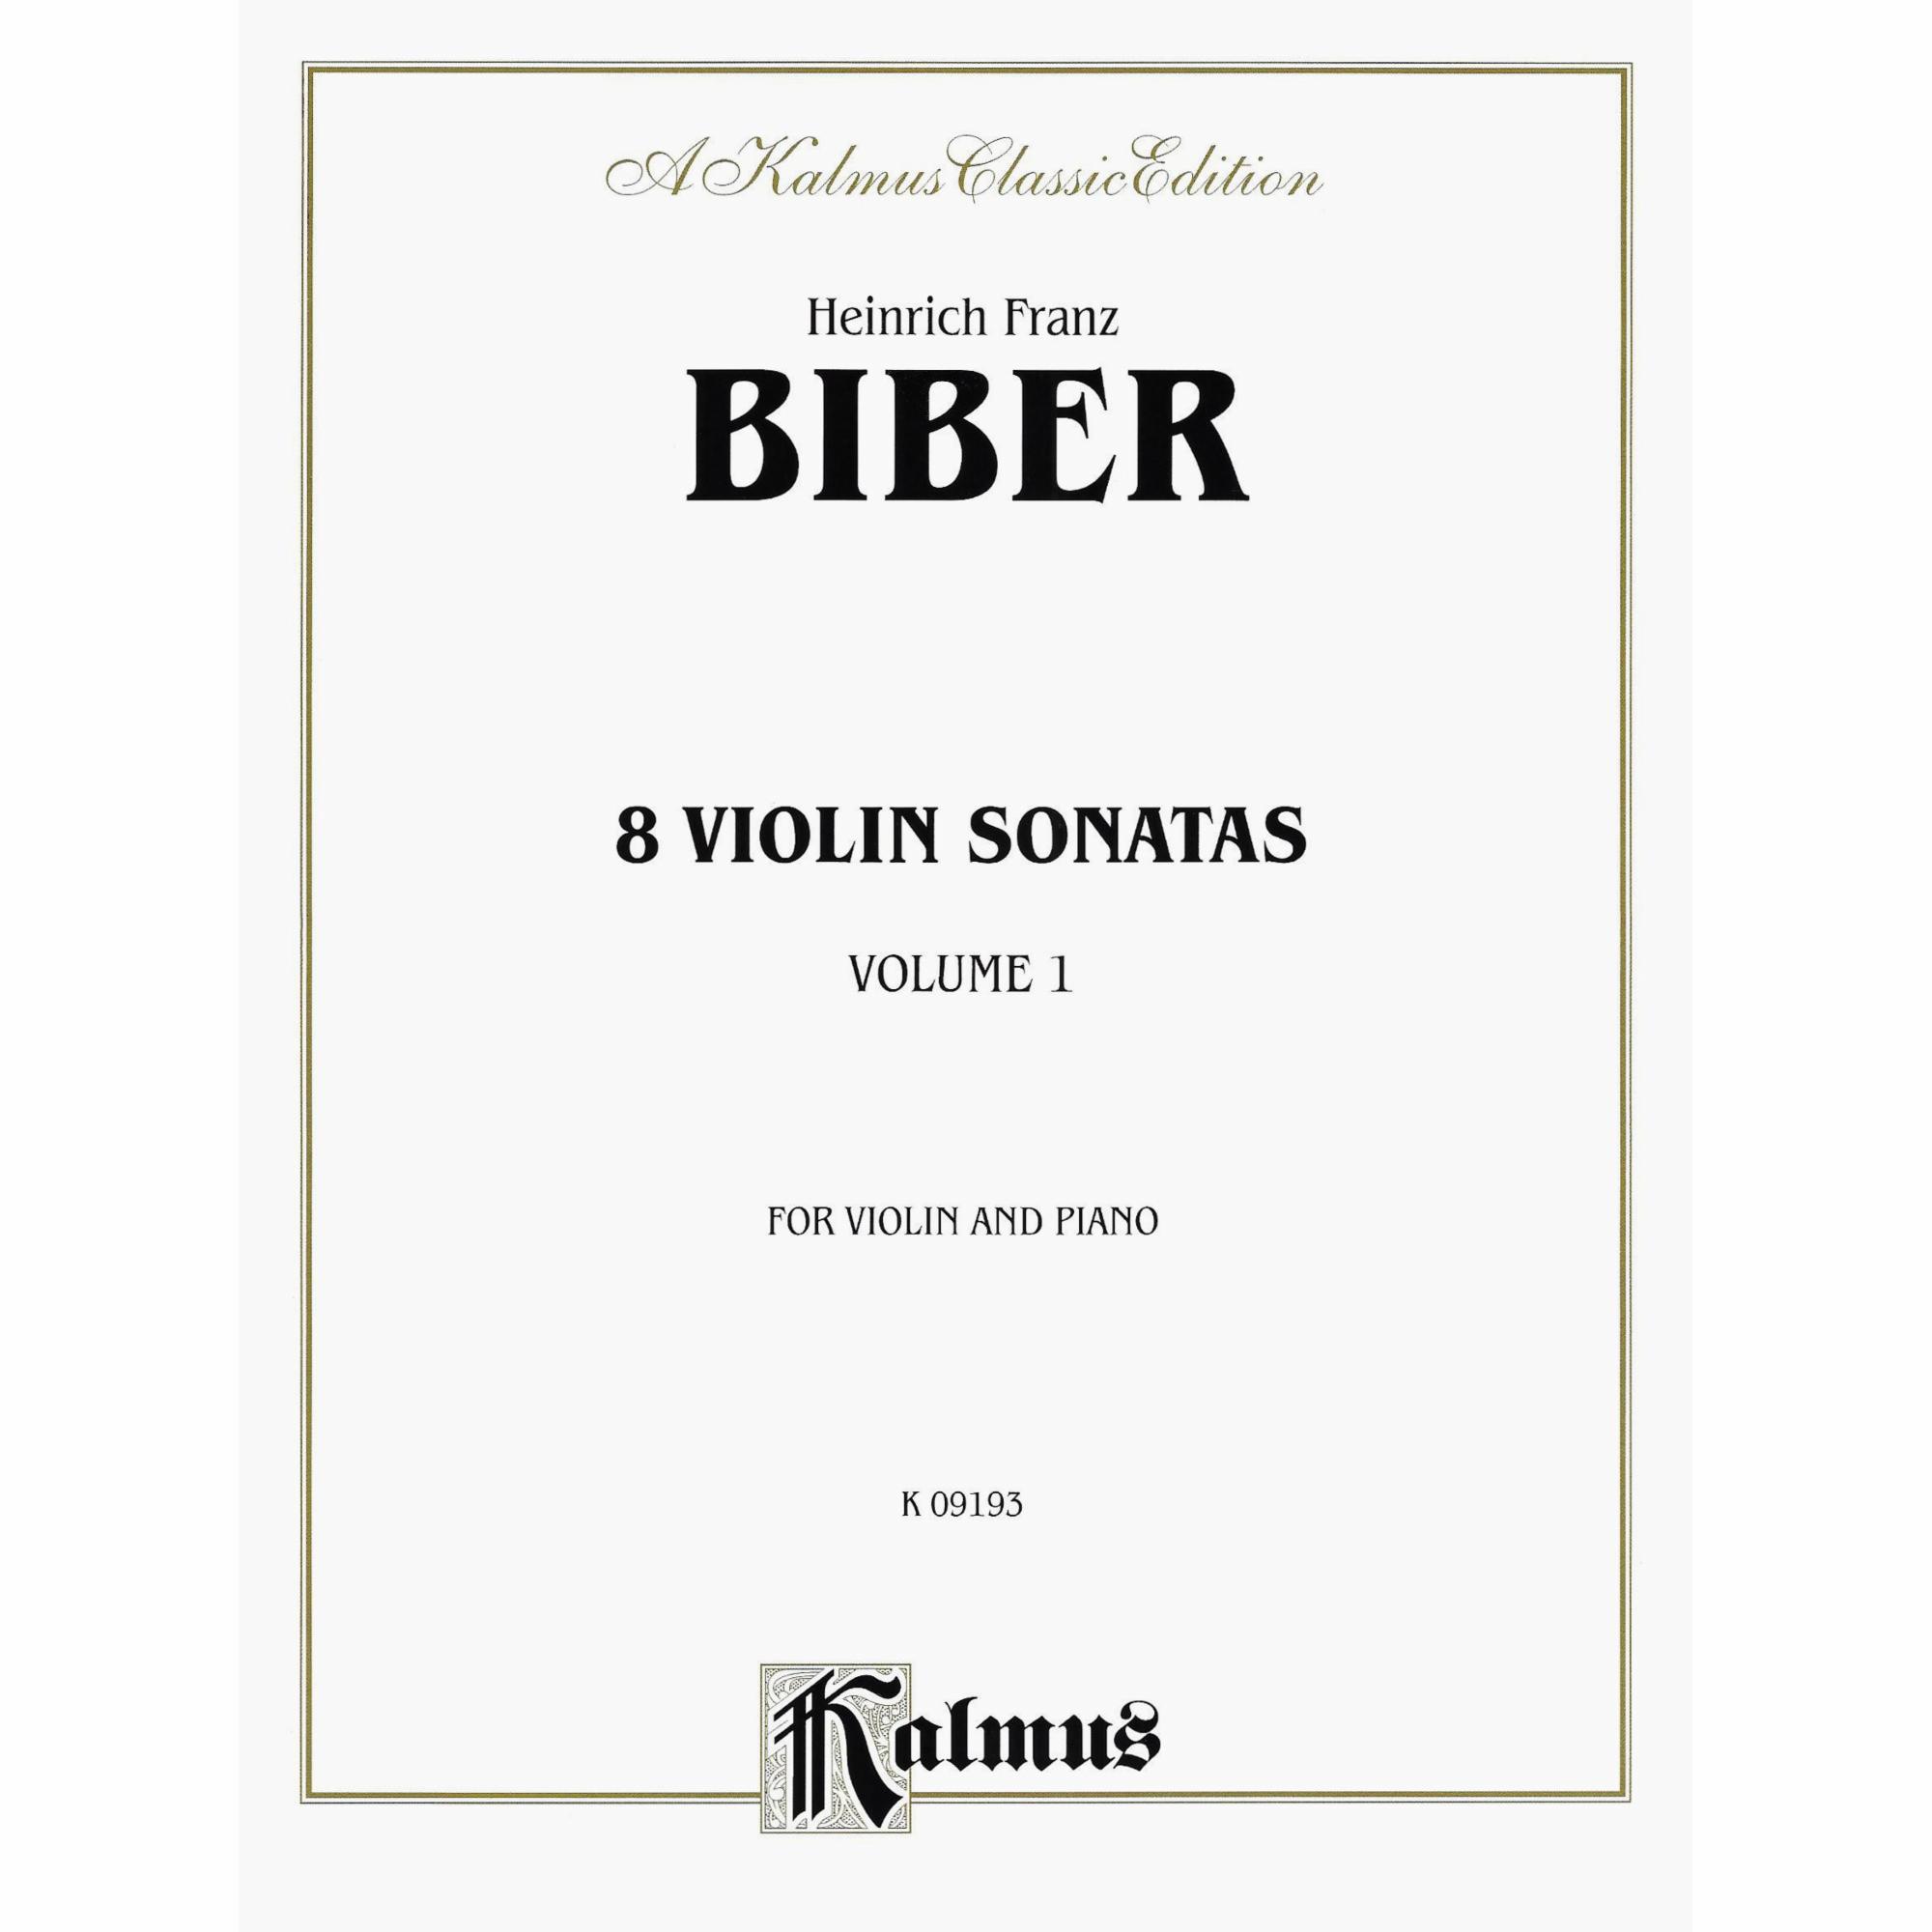 Biber -- Sonatas, Vols. I & II for Violin and Piano